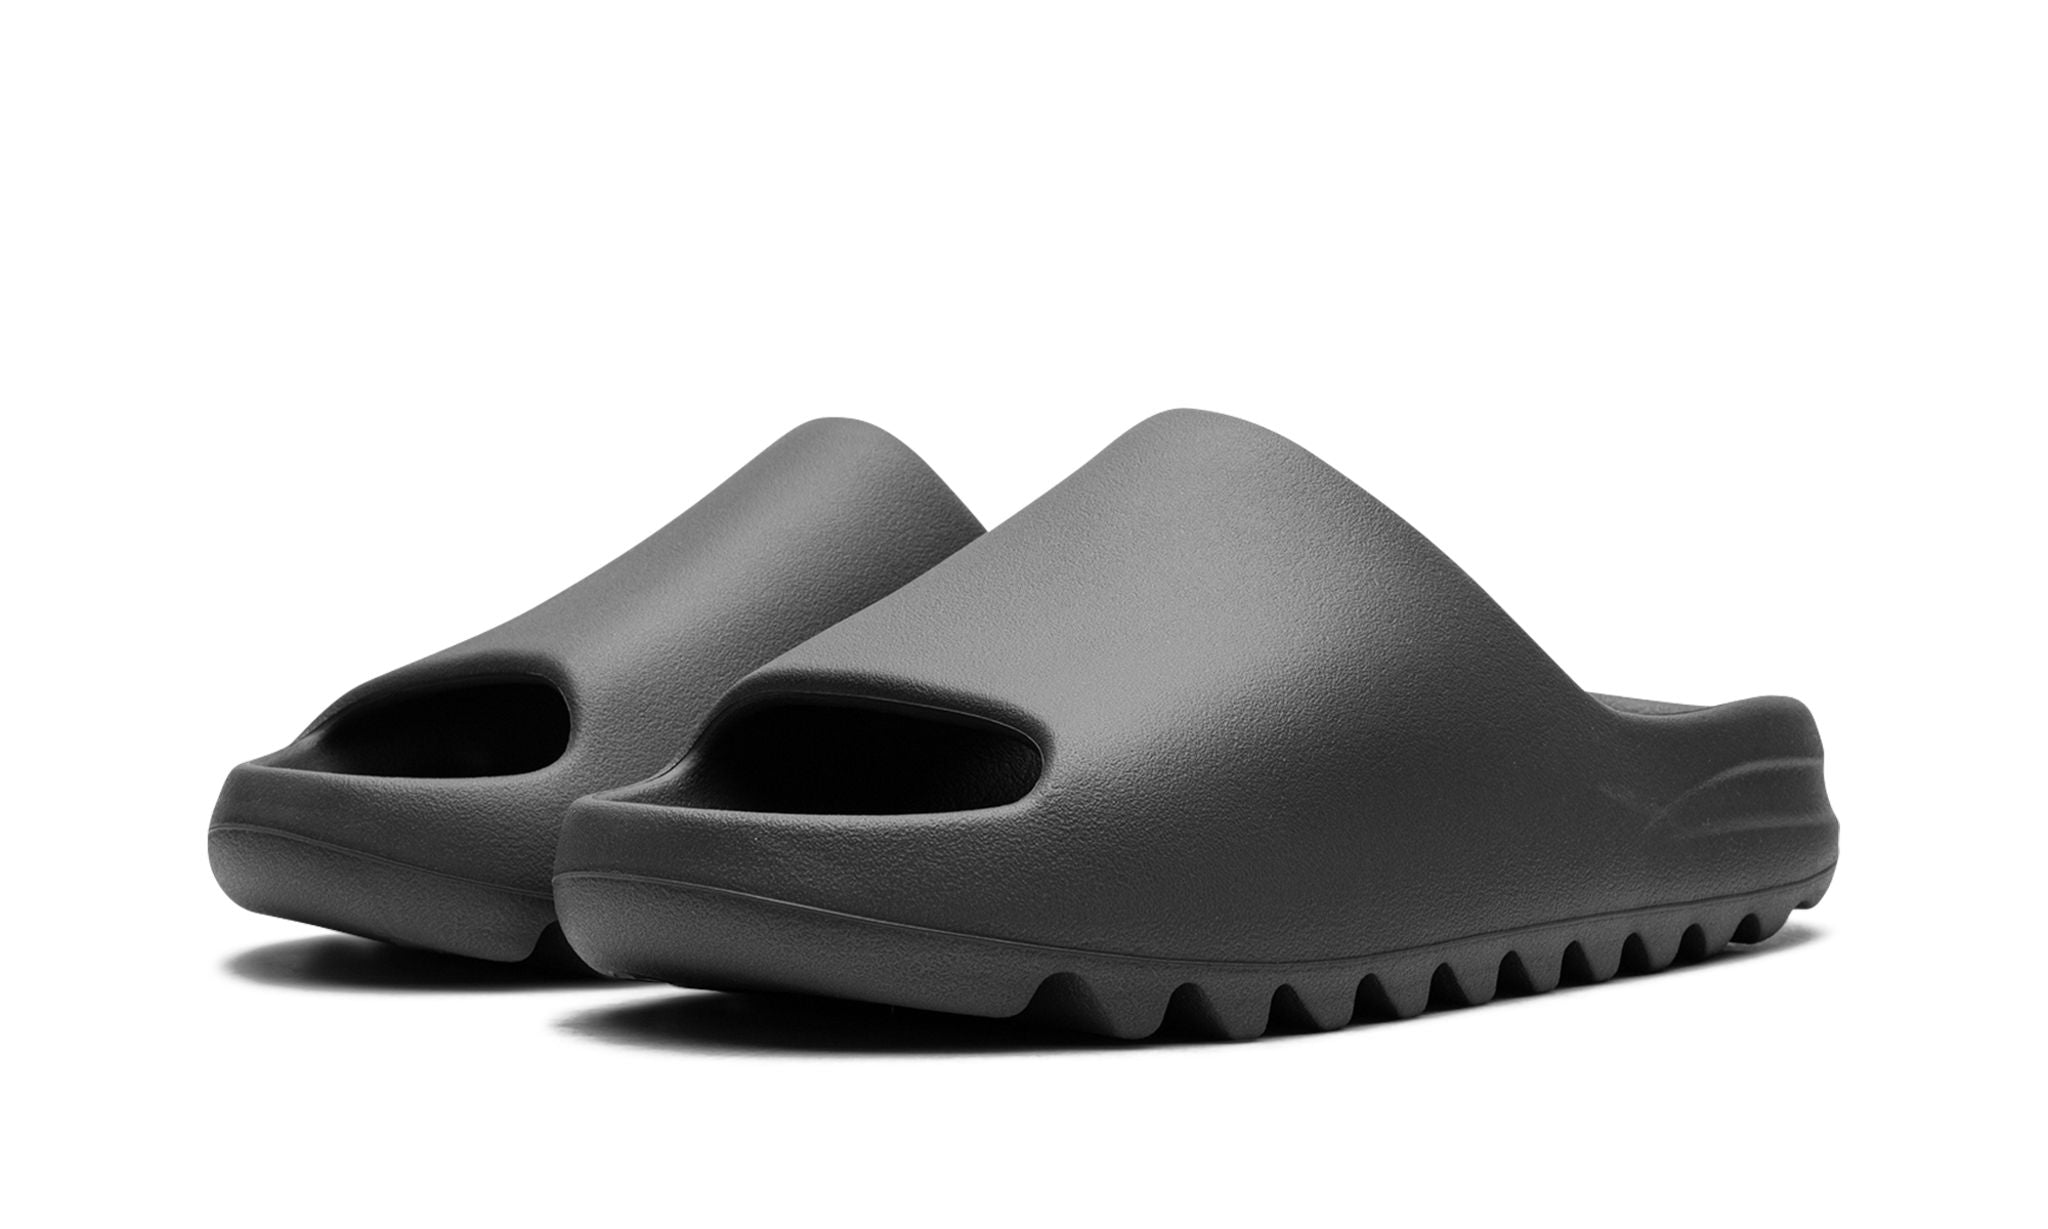 Adidas Yeezy Slide Granite - Yeezy Slide - Pirri